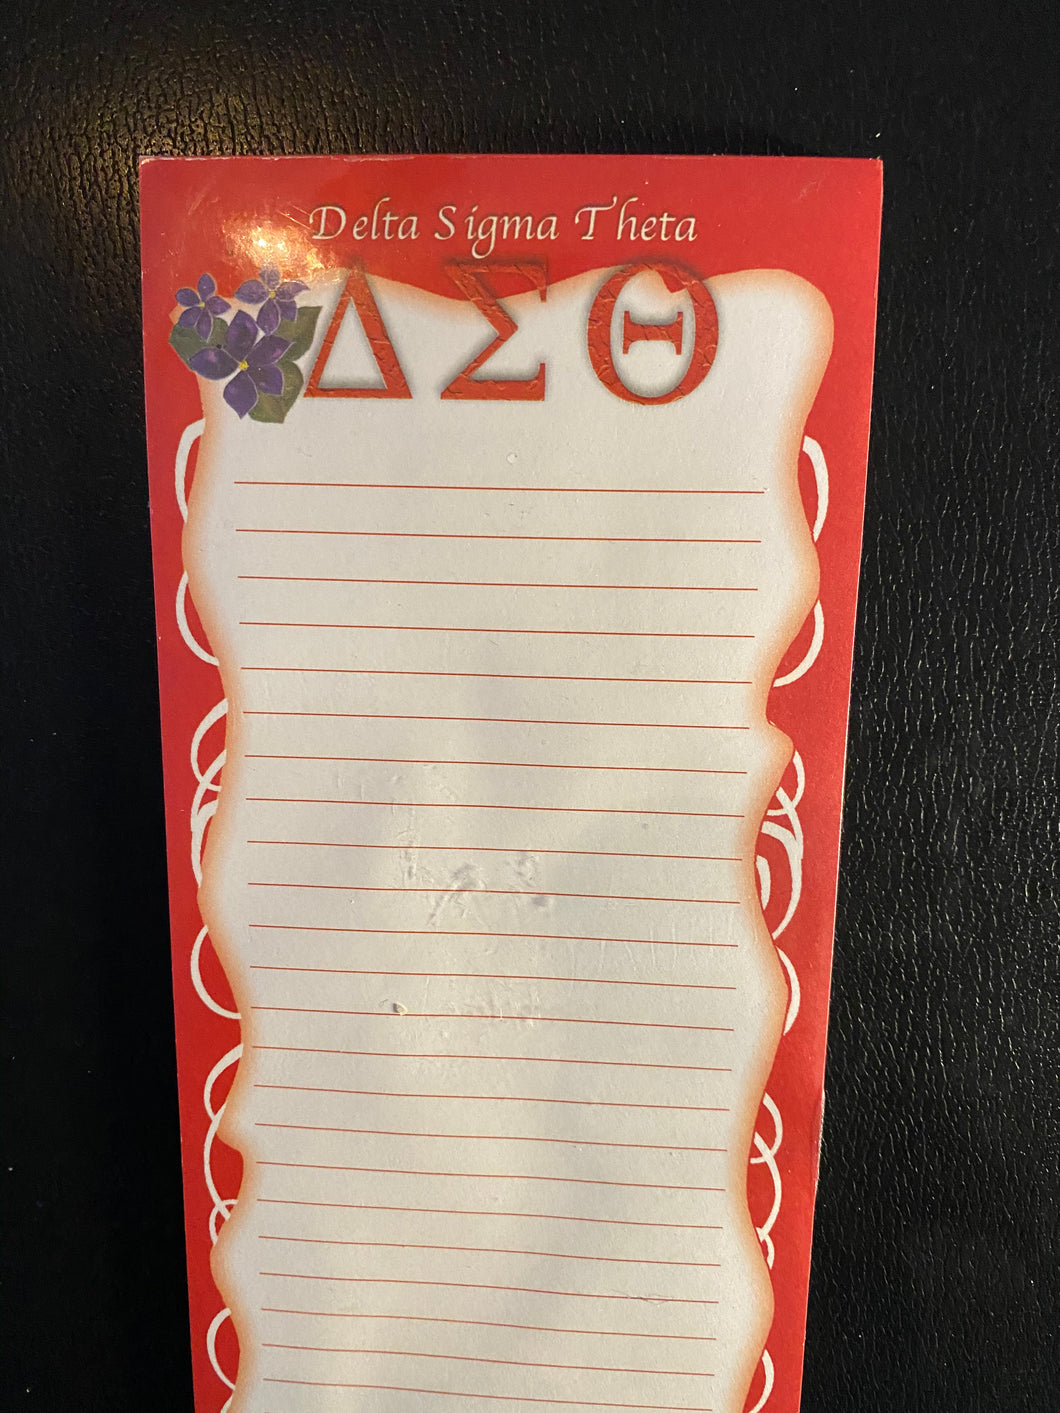 NEW!!! Delta Sigma Theta Things To Do Pad